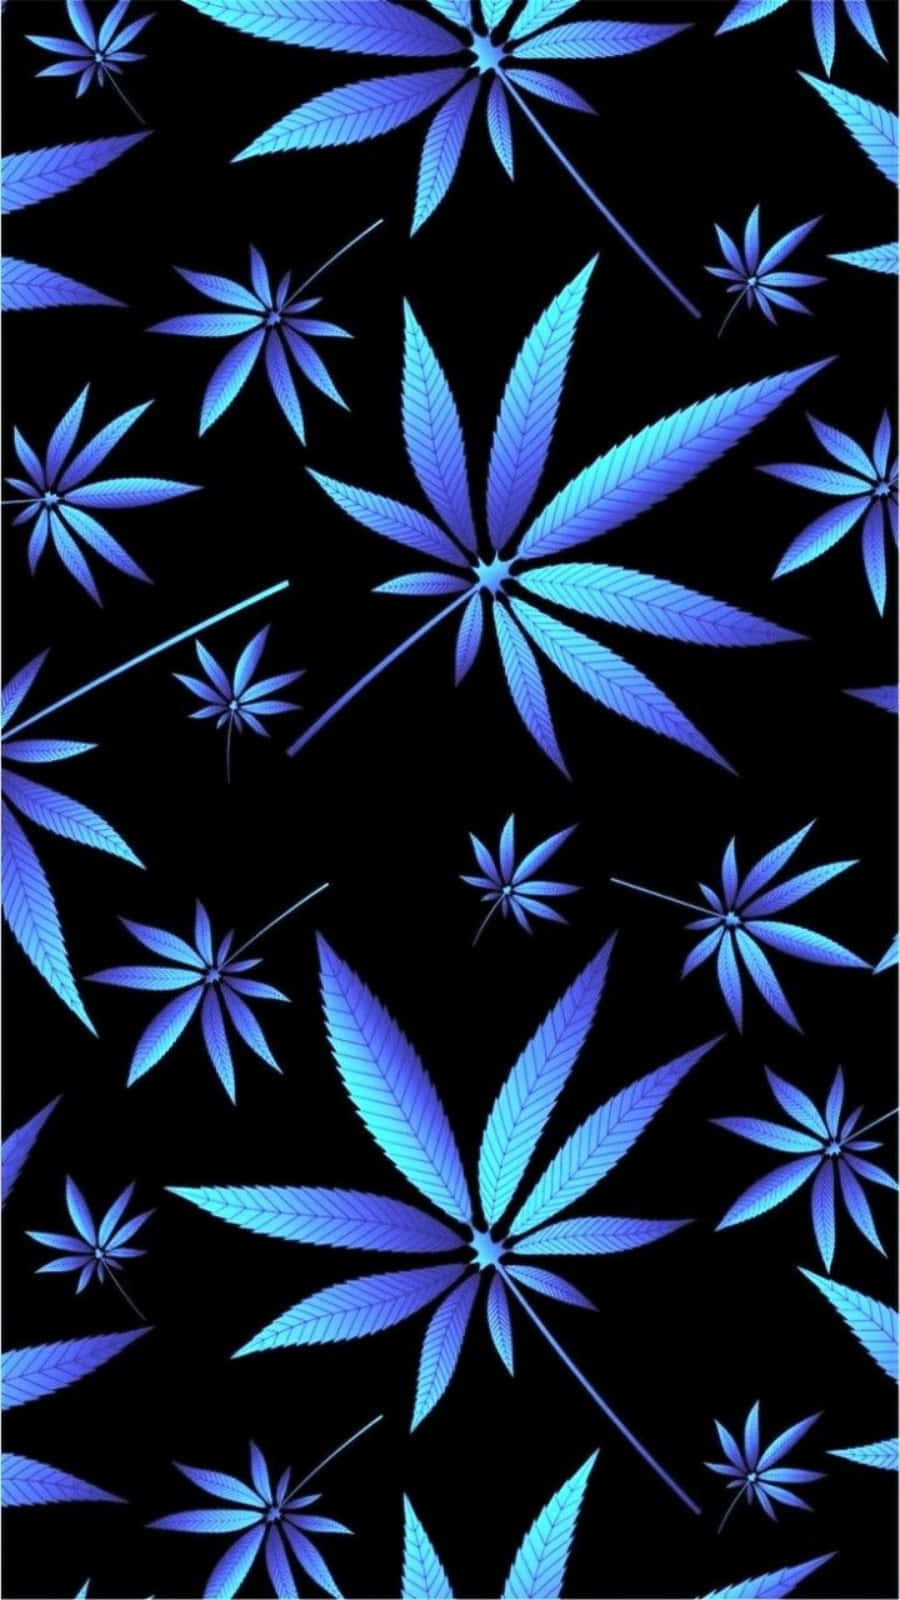 Amistura Perfeita De Cannabis: Merda, Dope & Erva. Papel de Parede